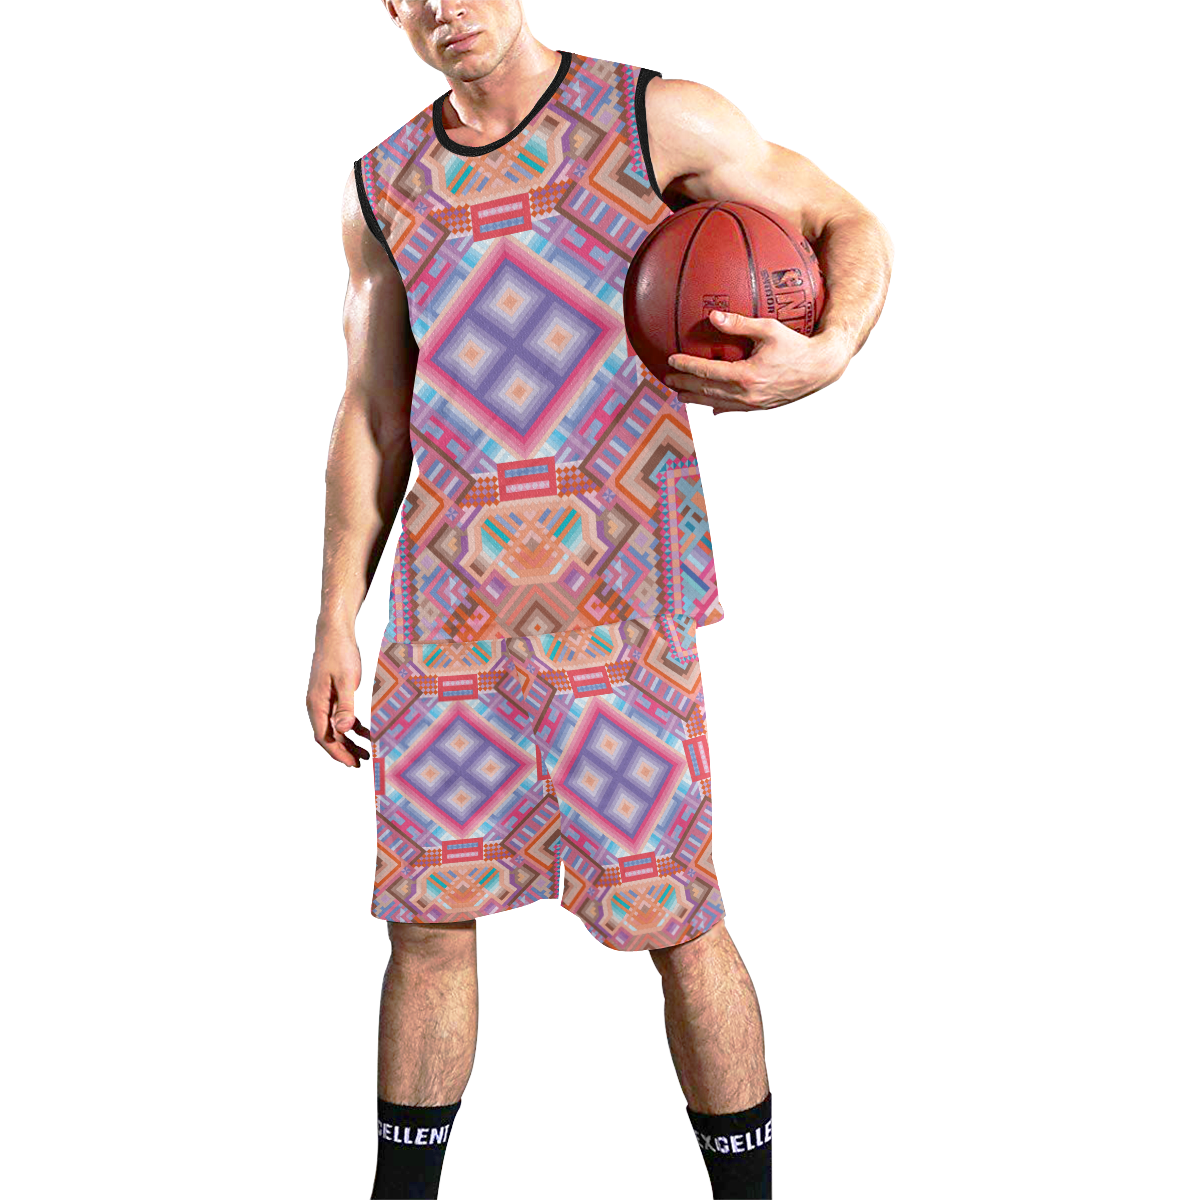 Researcher All Over Print Basketball Uniform